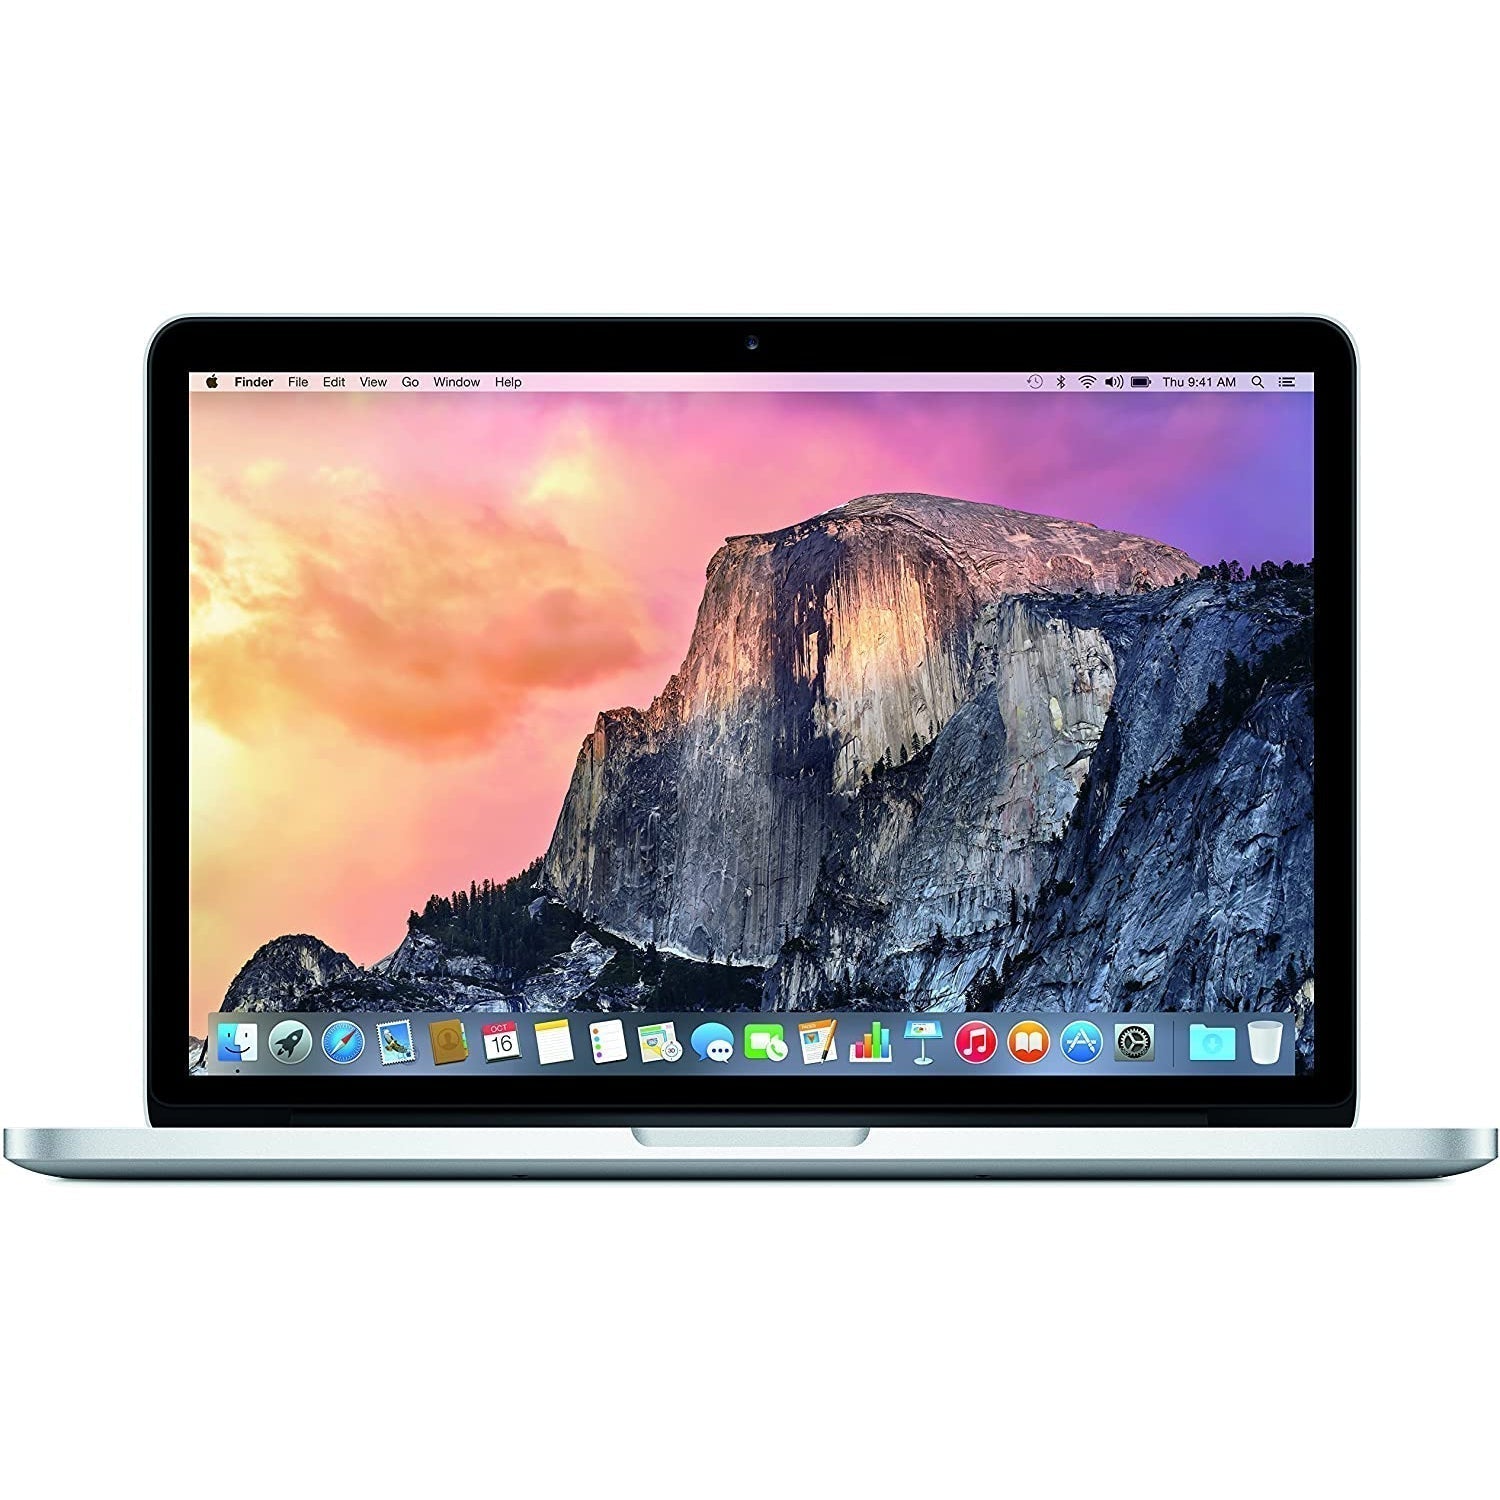 Apple MacBook Pro 13.3'' MF839LL/A (2015) Laptop, Intel Core i5, 8GB RAM, 128GB, Silver - Refurbished Good